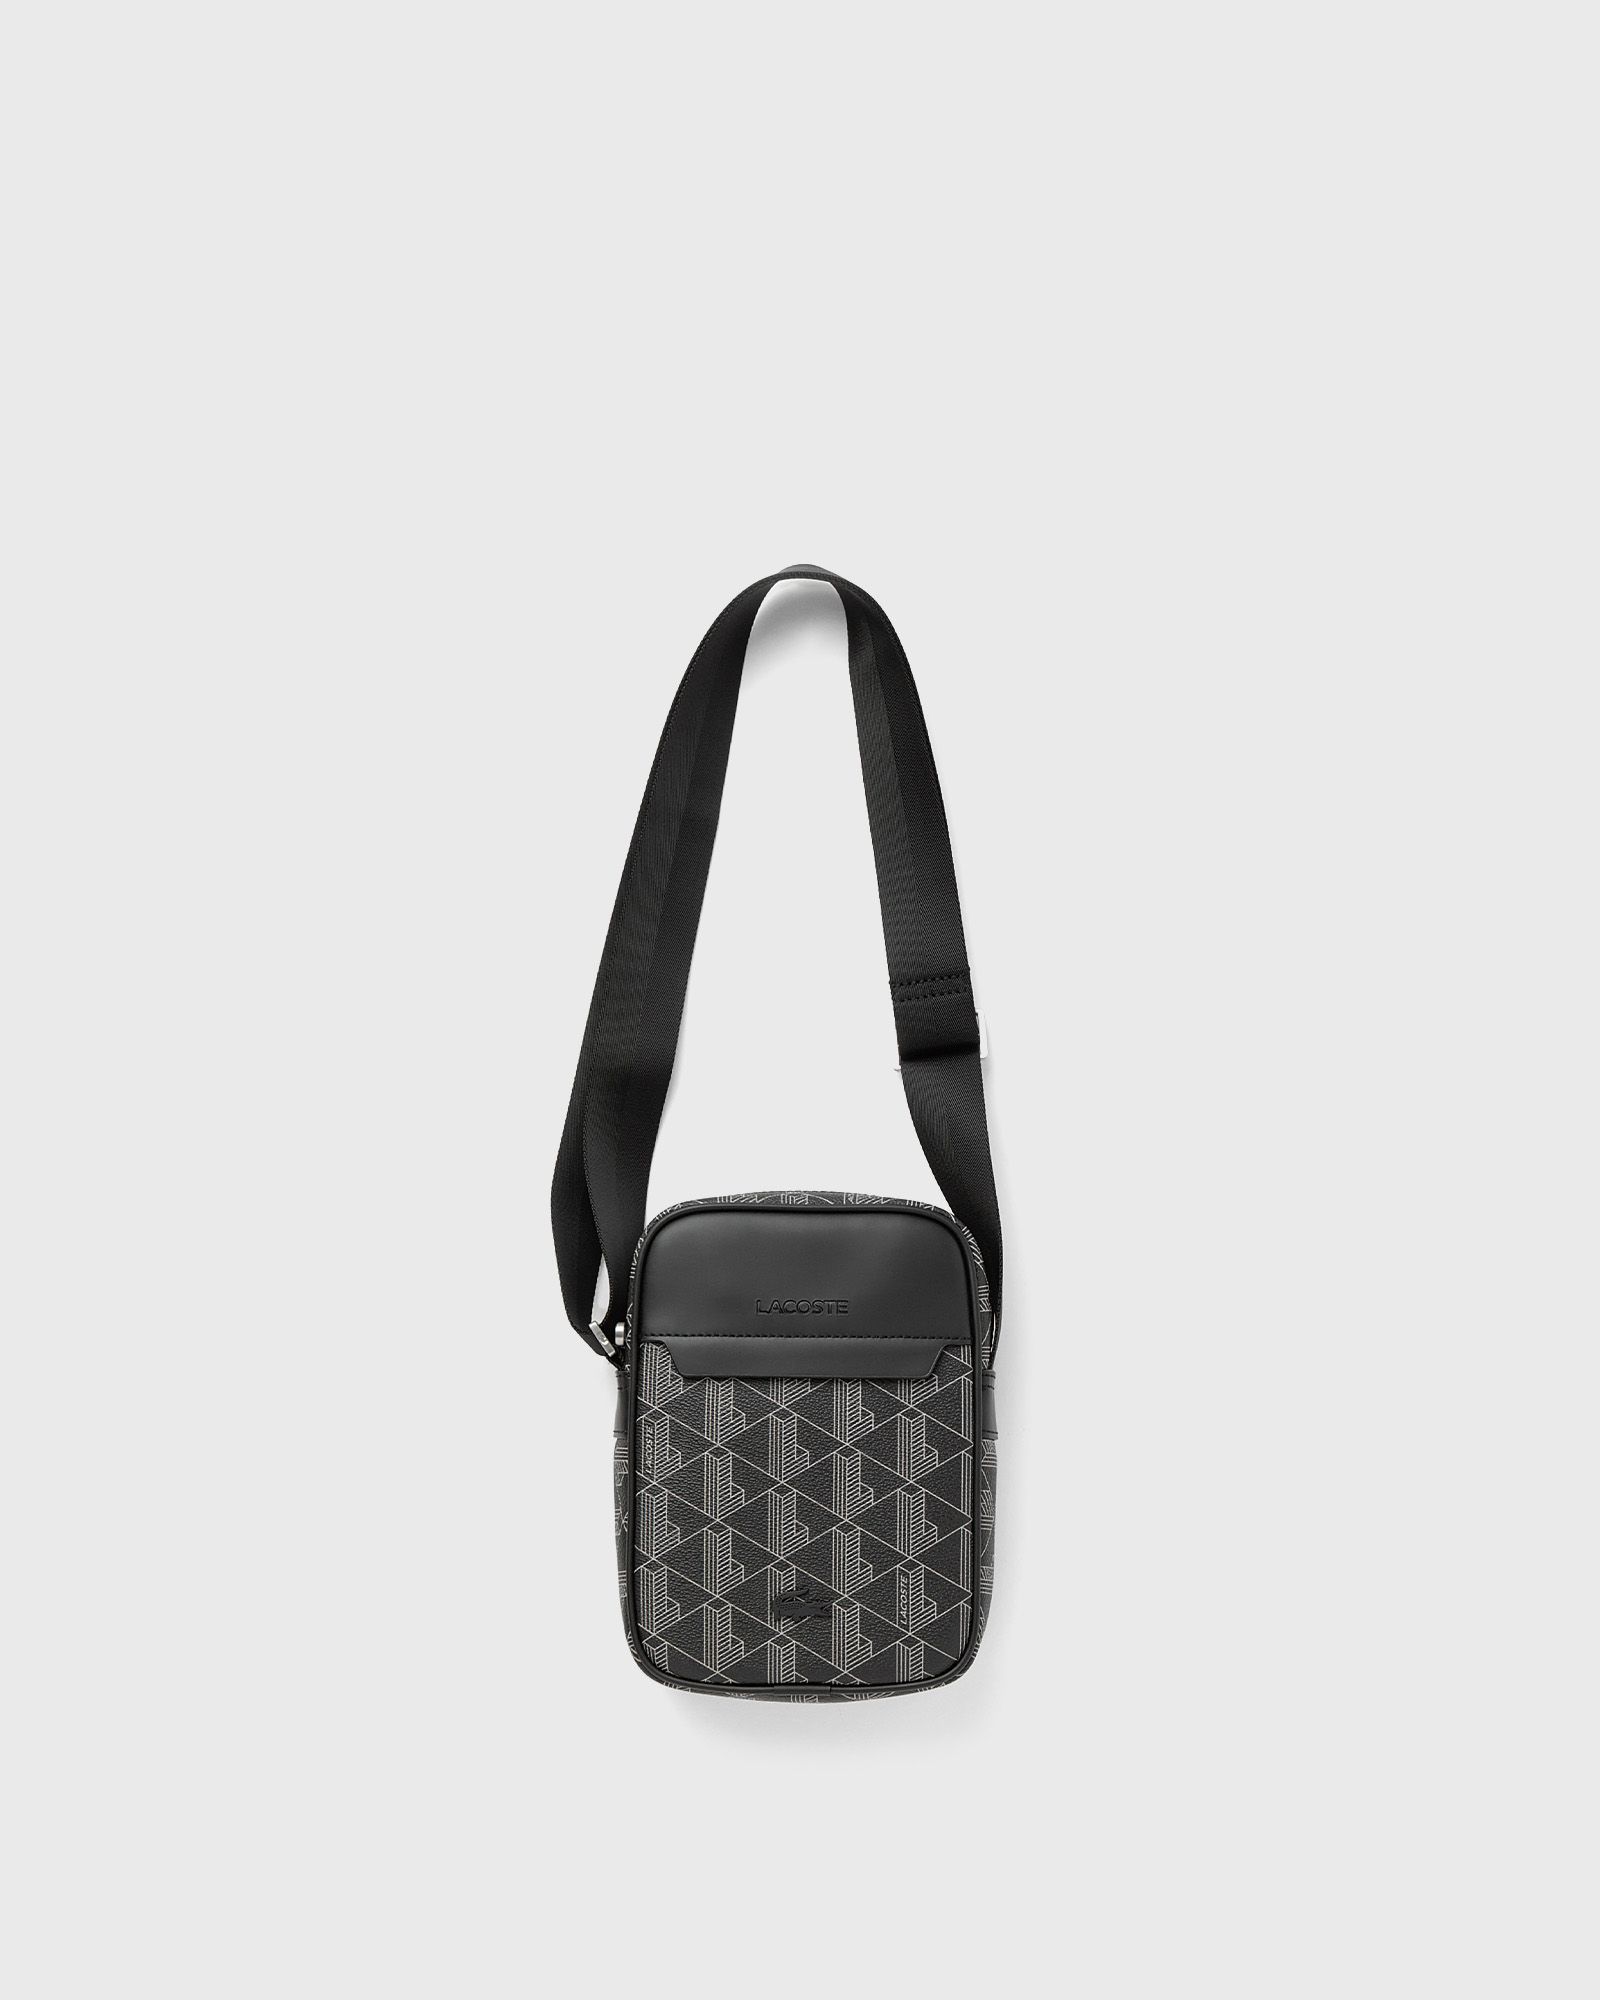 Lacoste - crossover bag men messenger & crossbody bags black in größe:one size